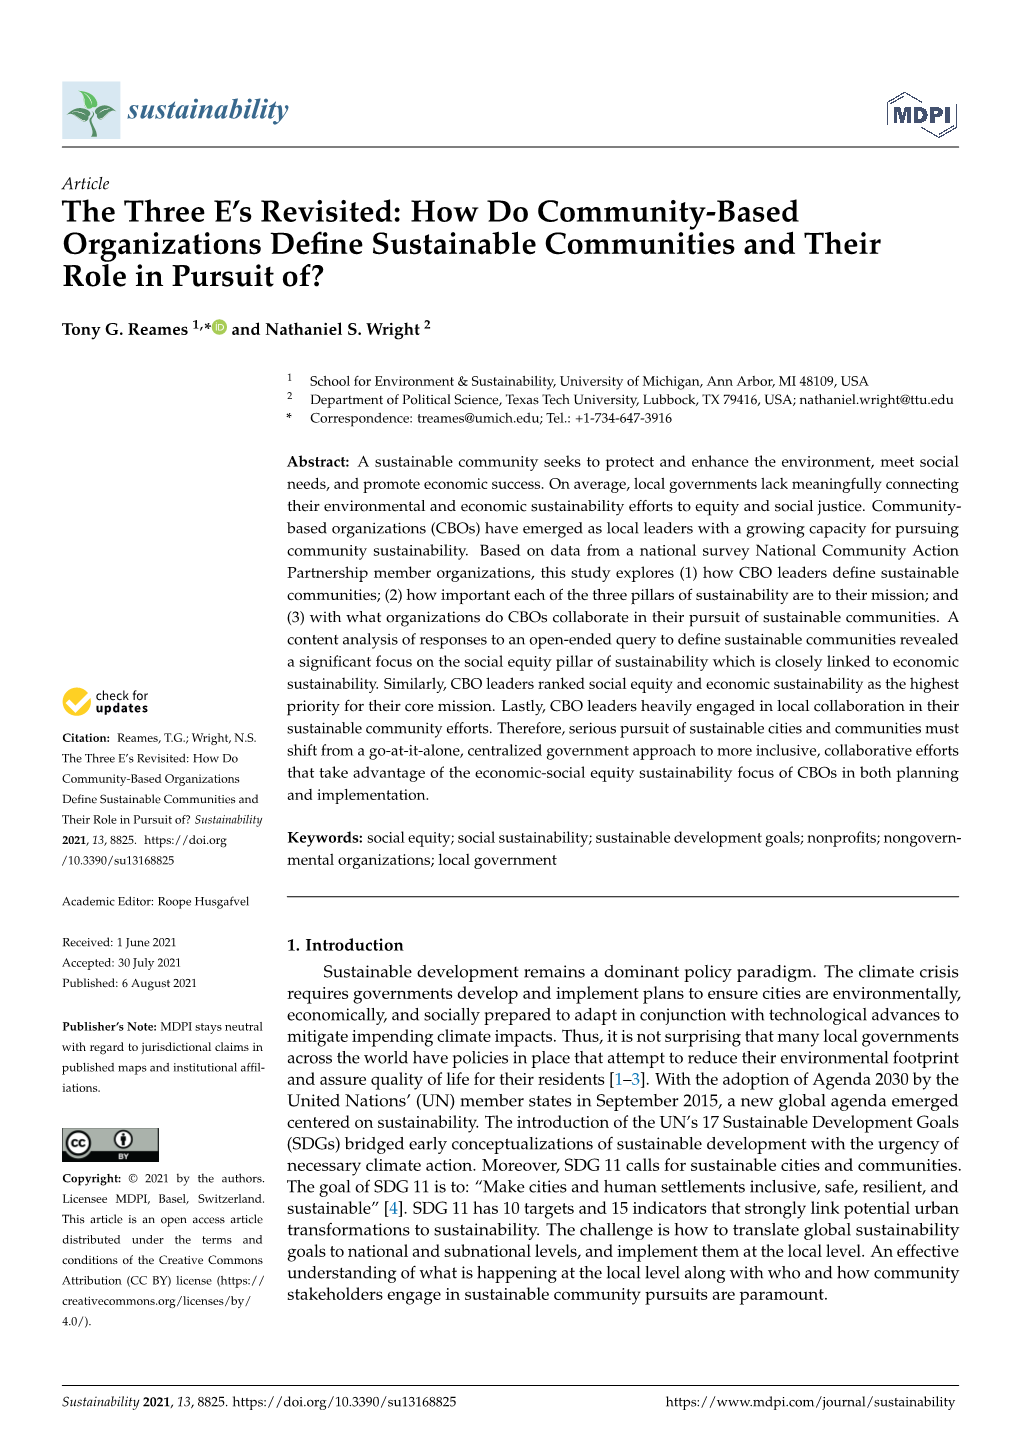 How Do Community-Based Organizations Define